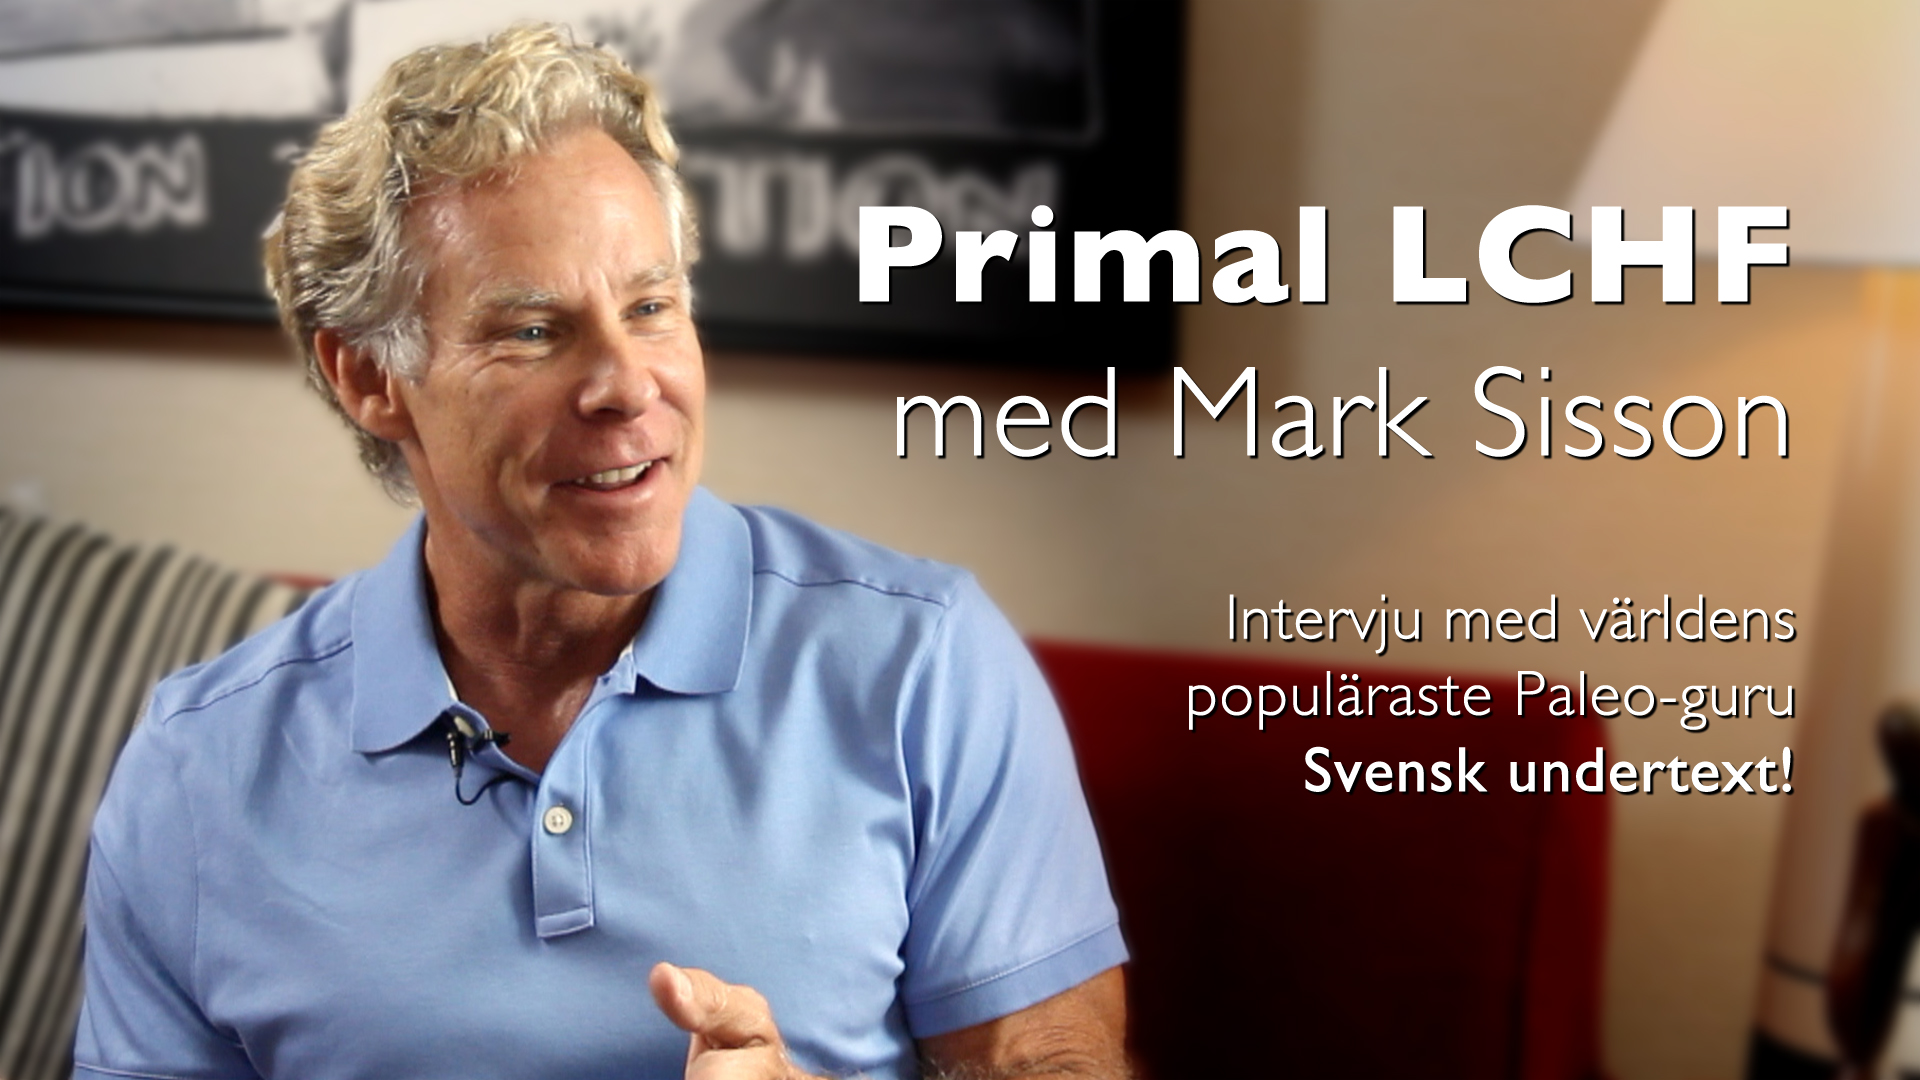 Primal LCHF med Mark Sisson